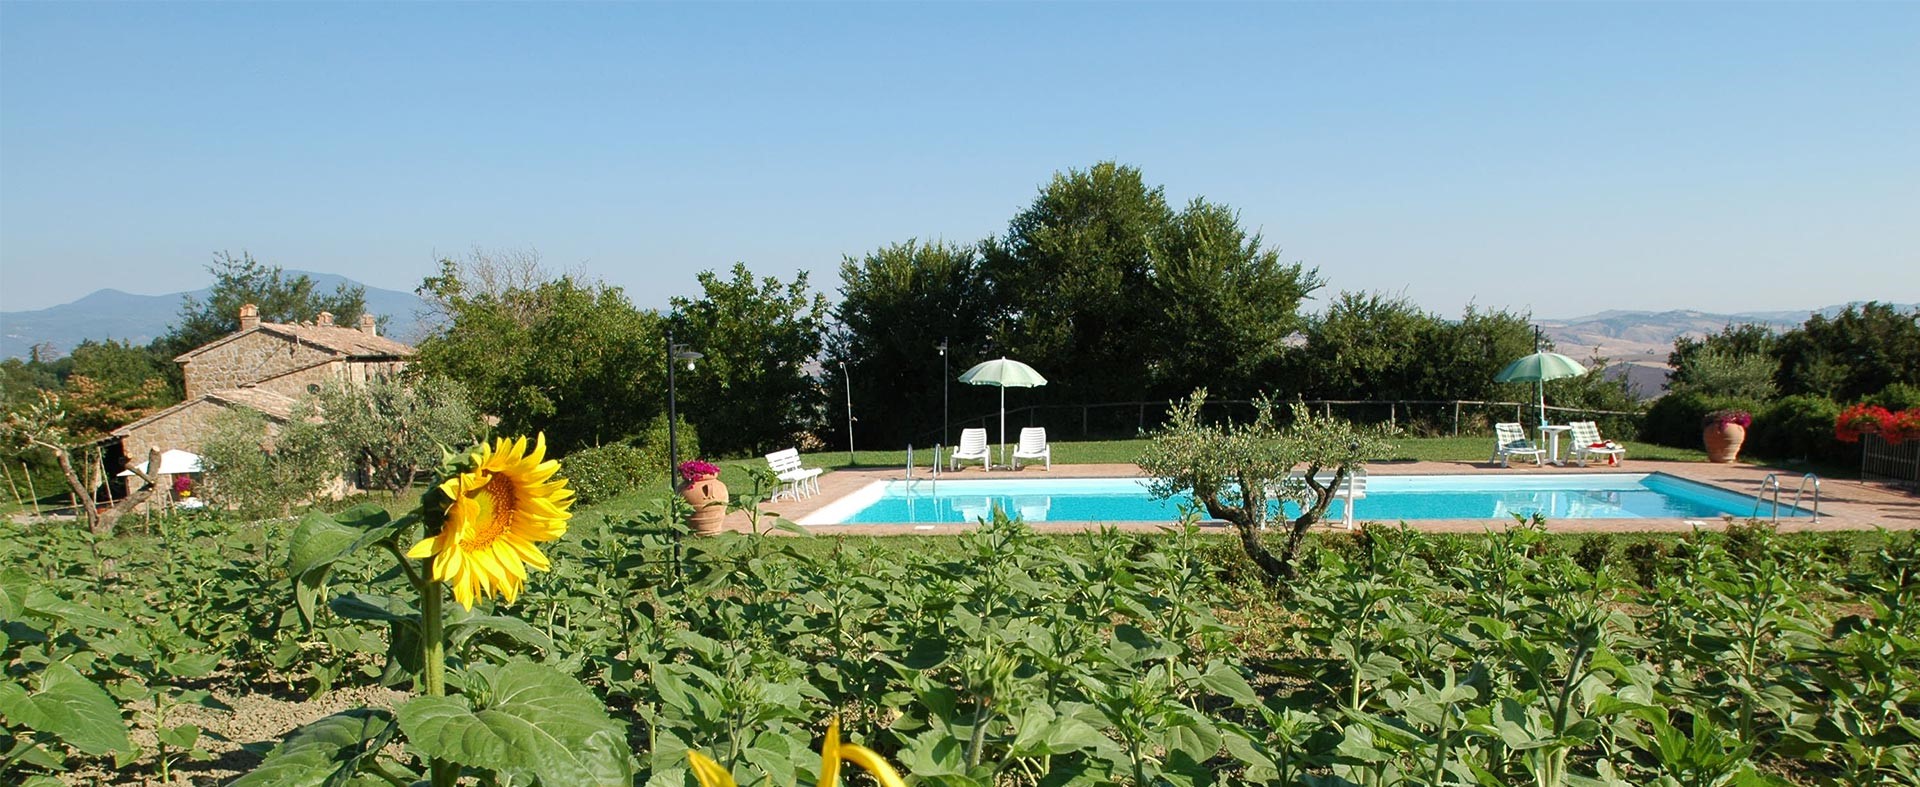 32_8b1063d_Agriturismo, kindvriendelijk vakantiehuis met zwembad, kleinschalig, Bolsena, Lazio, Poggio Porsenna, Italië, (12)